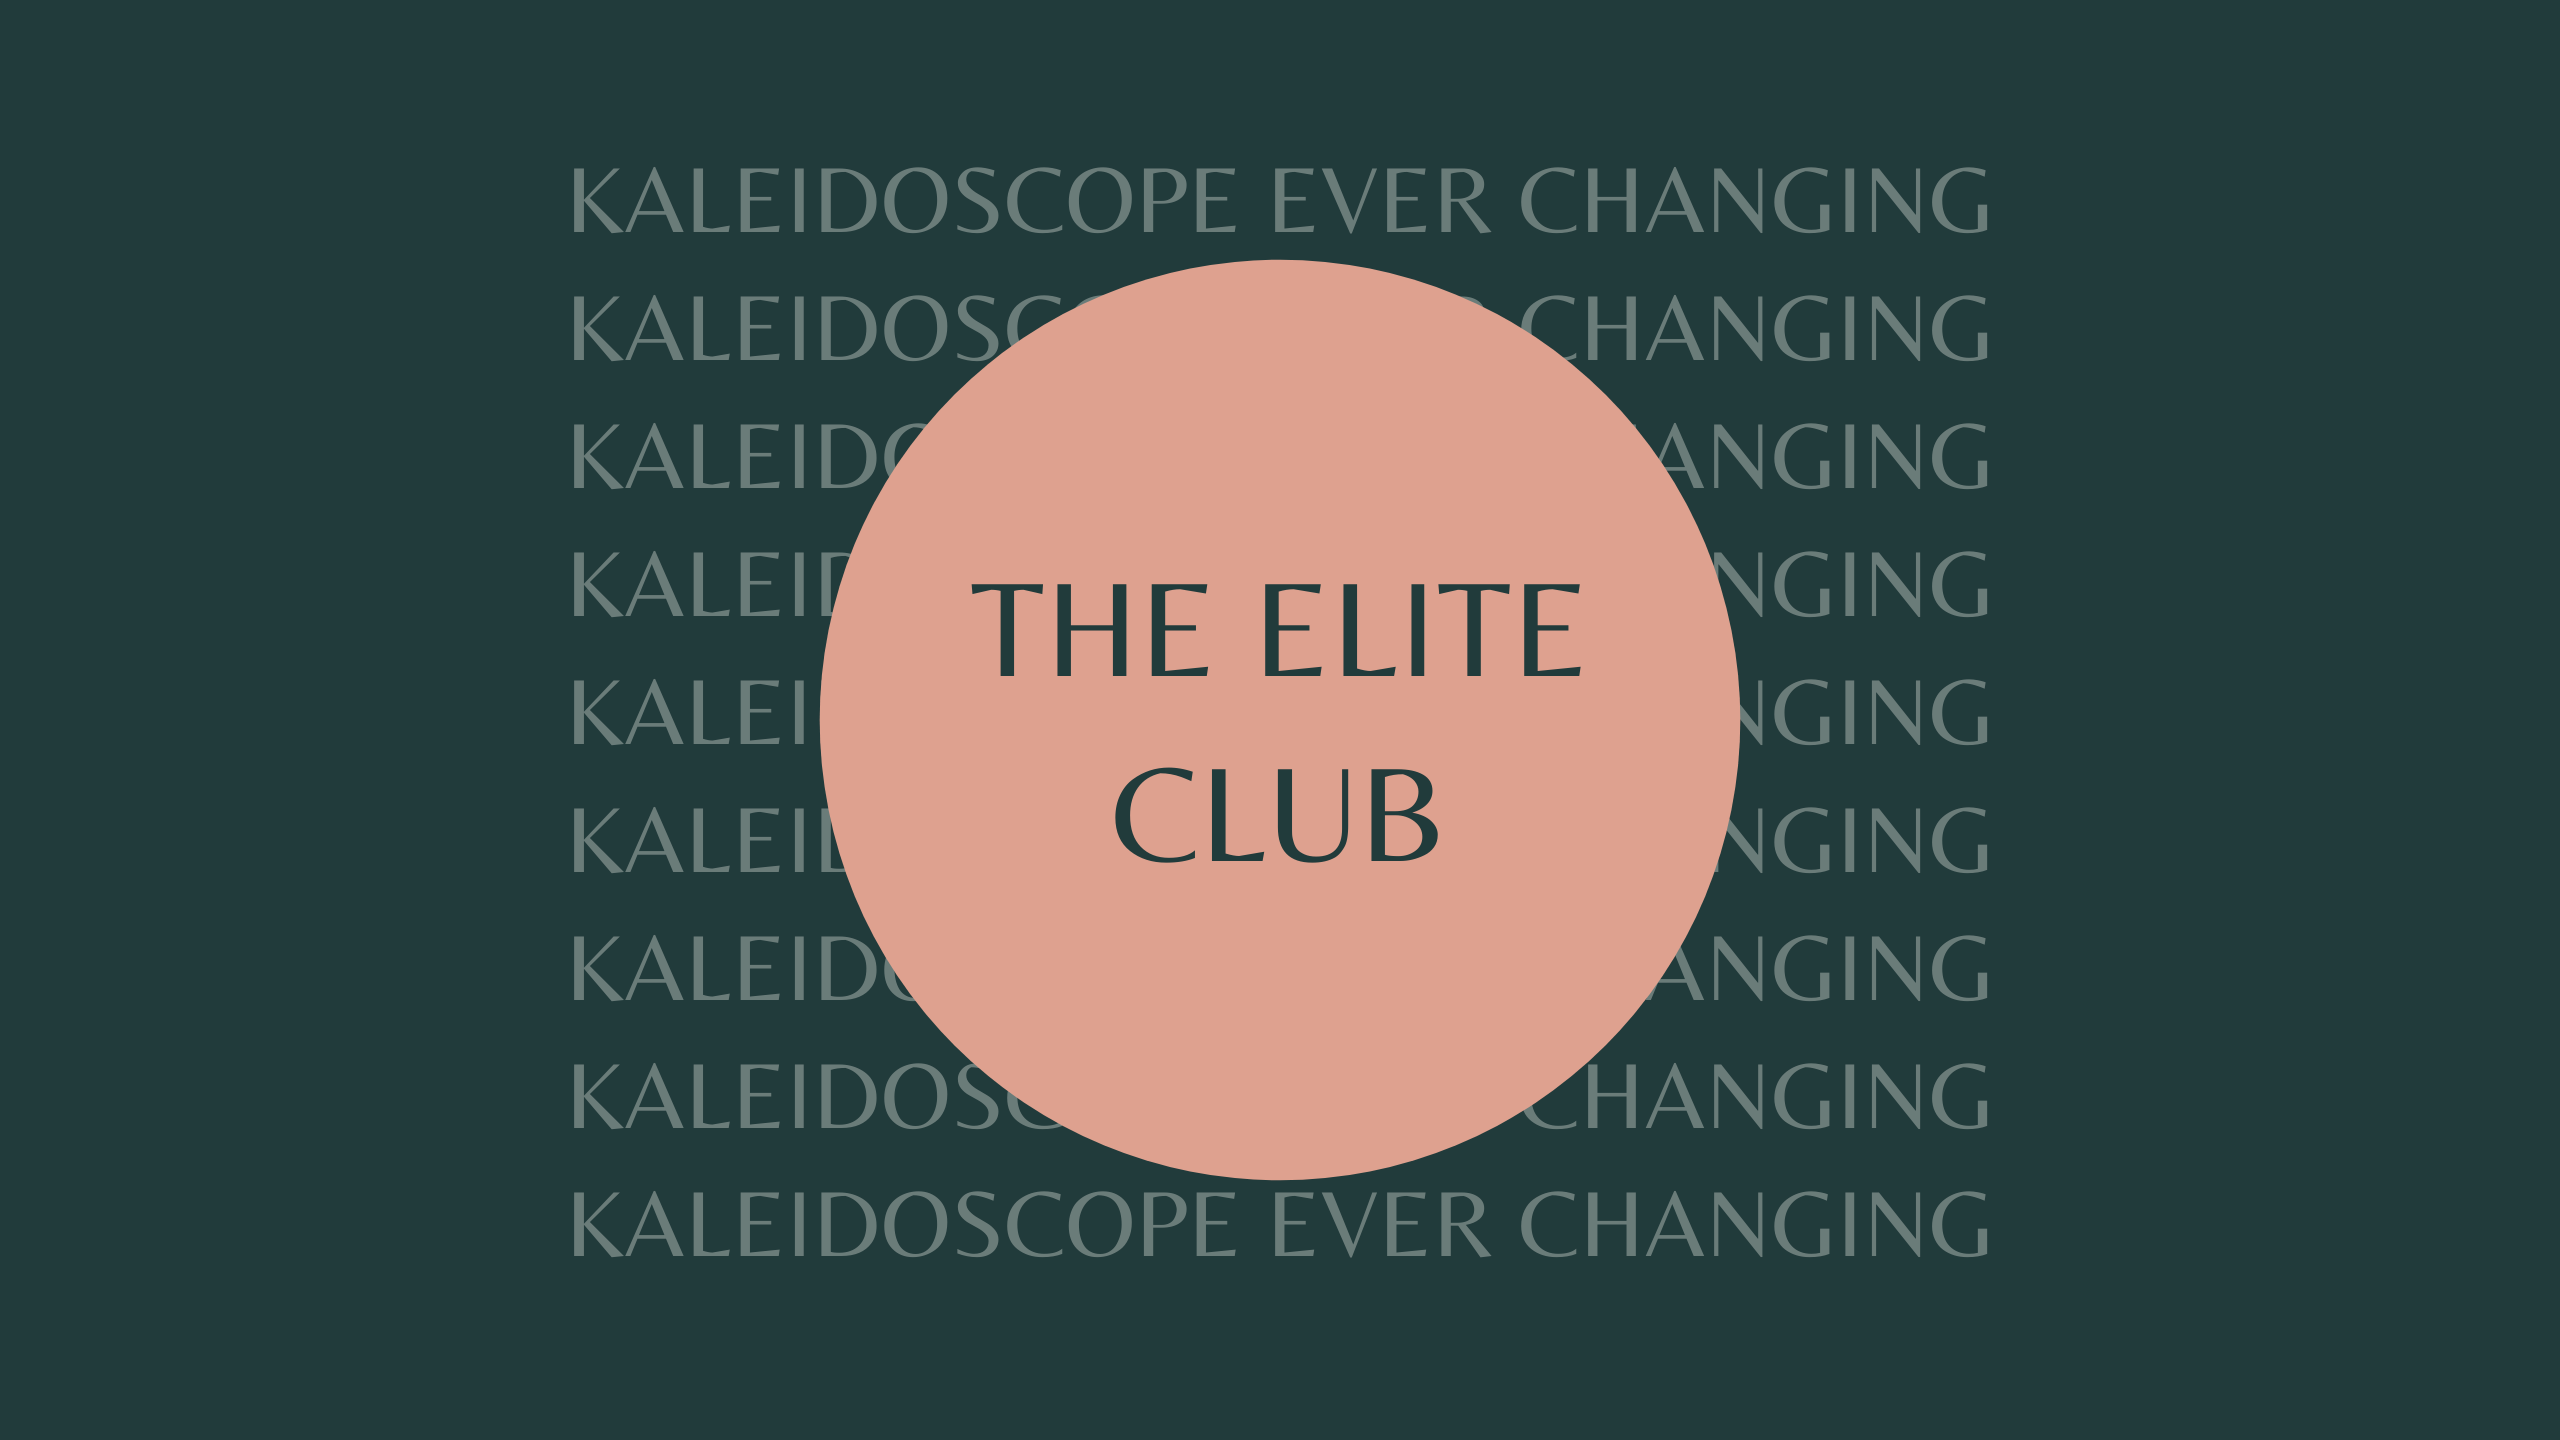 The Elite Club